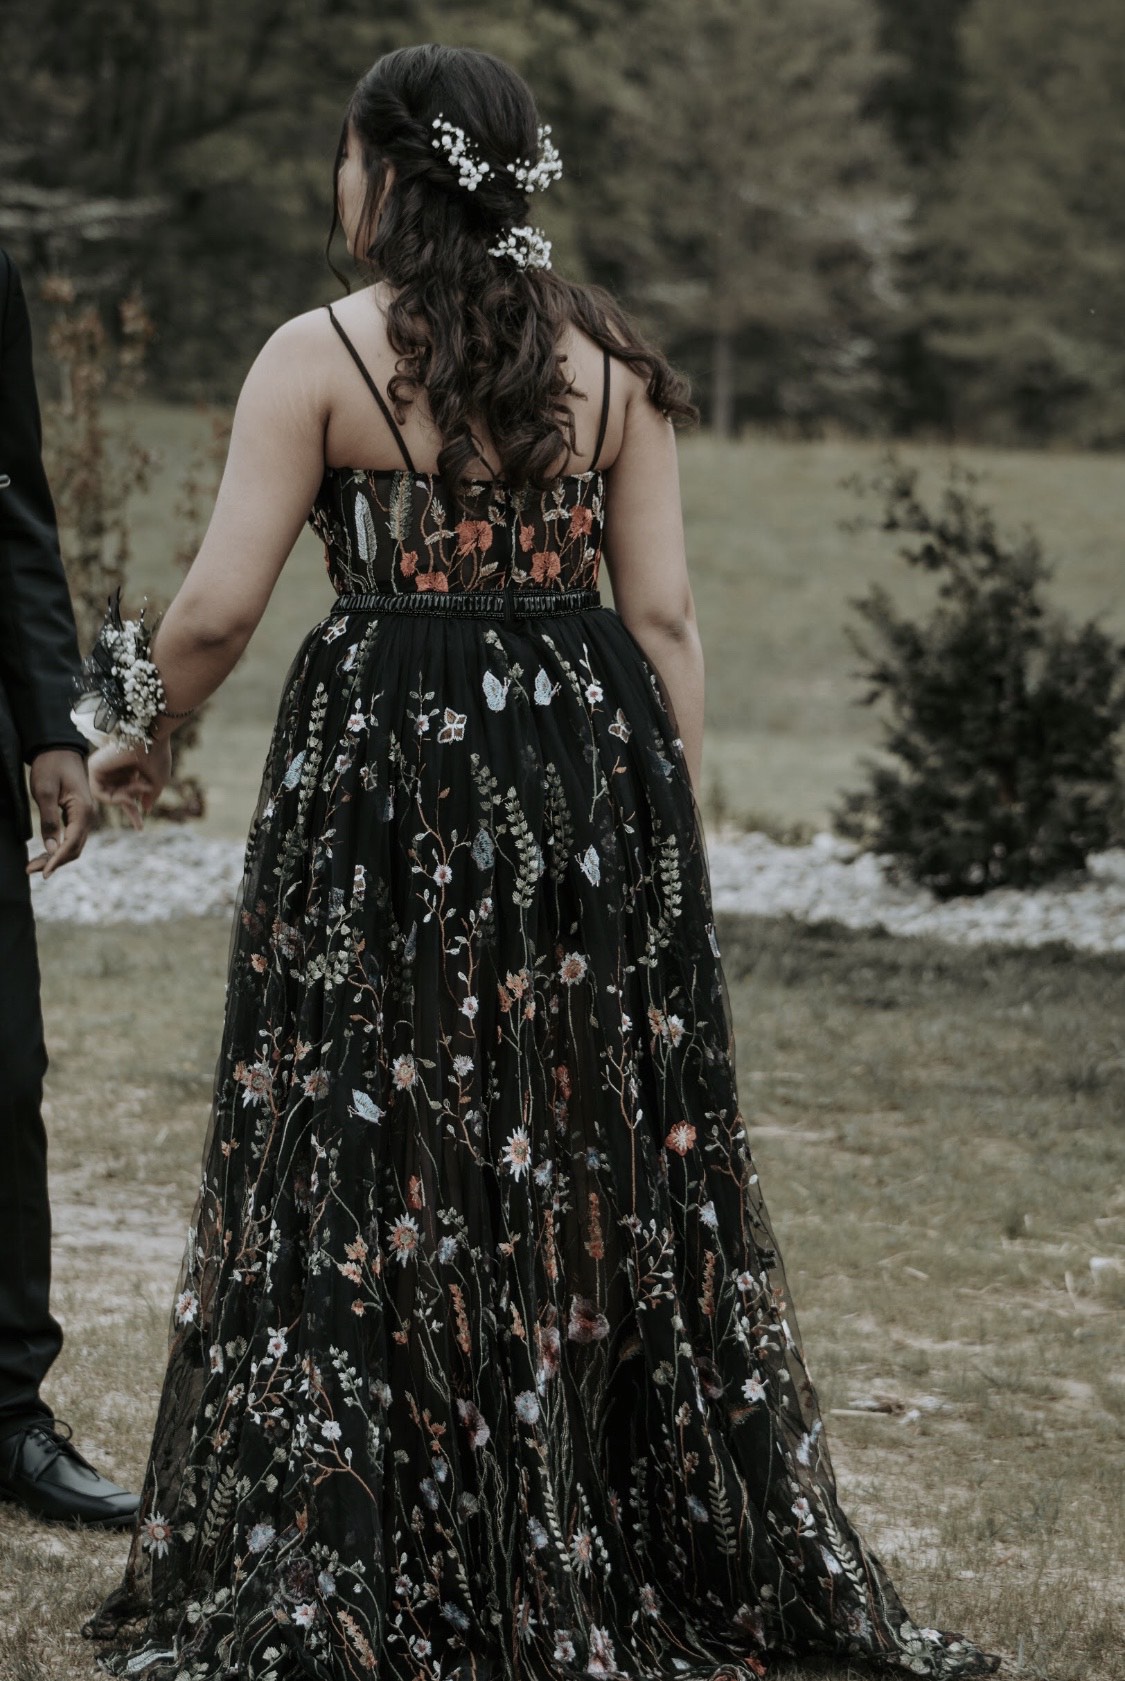 Black Floral Lace & Satin Classy Long Formal Dress - Promfy